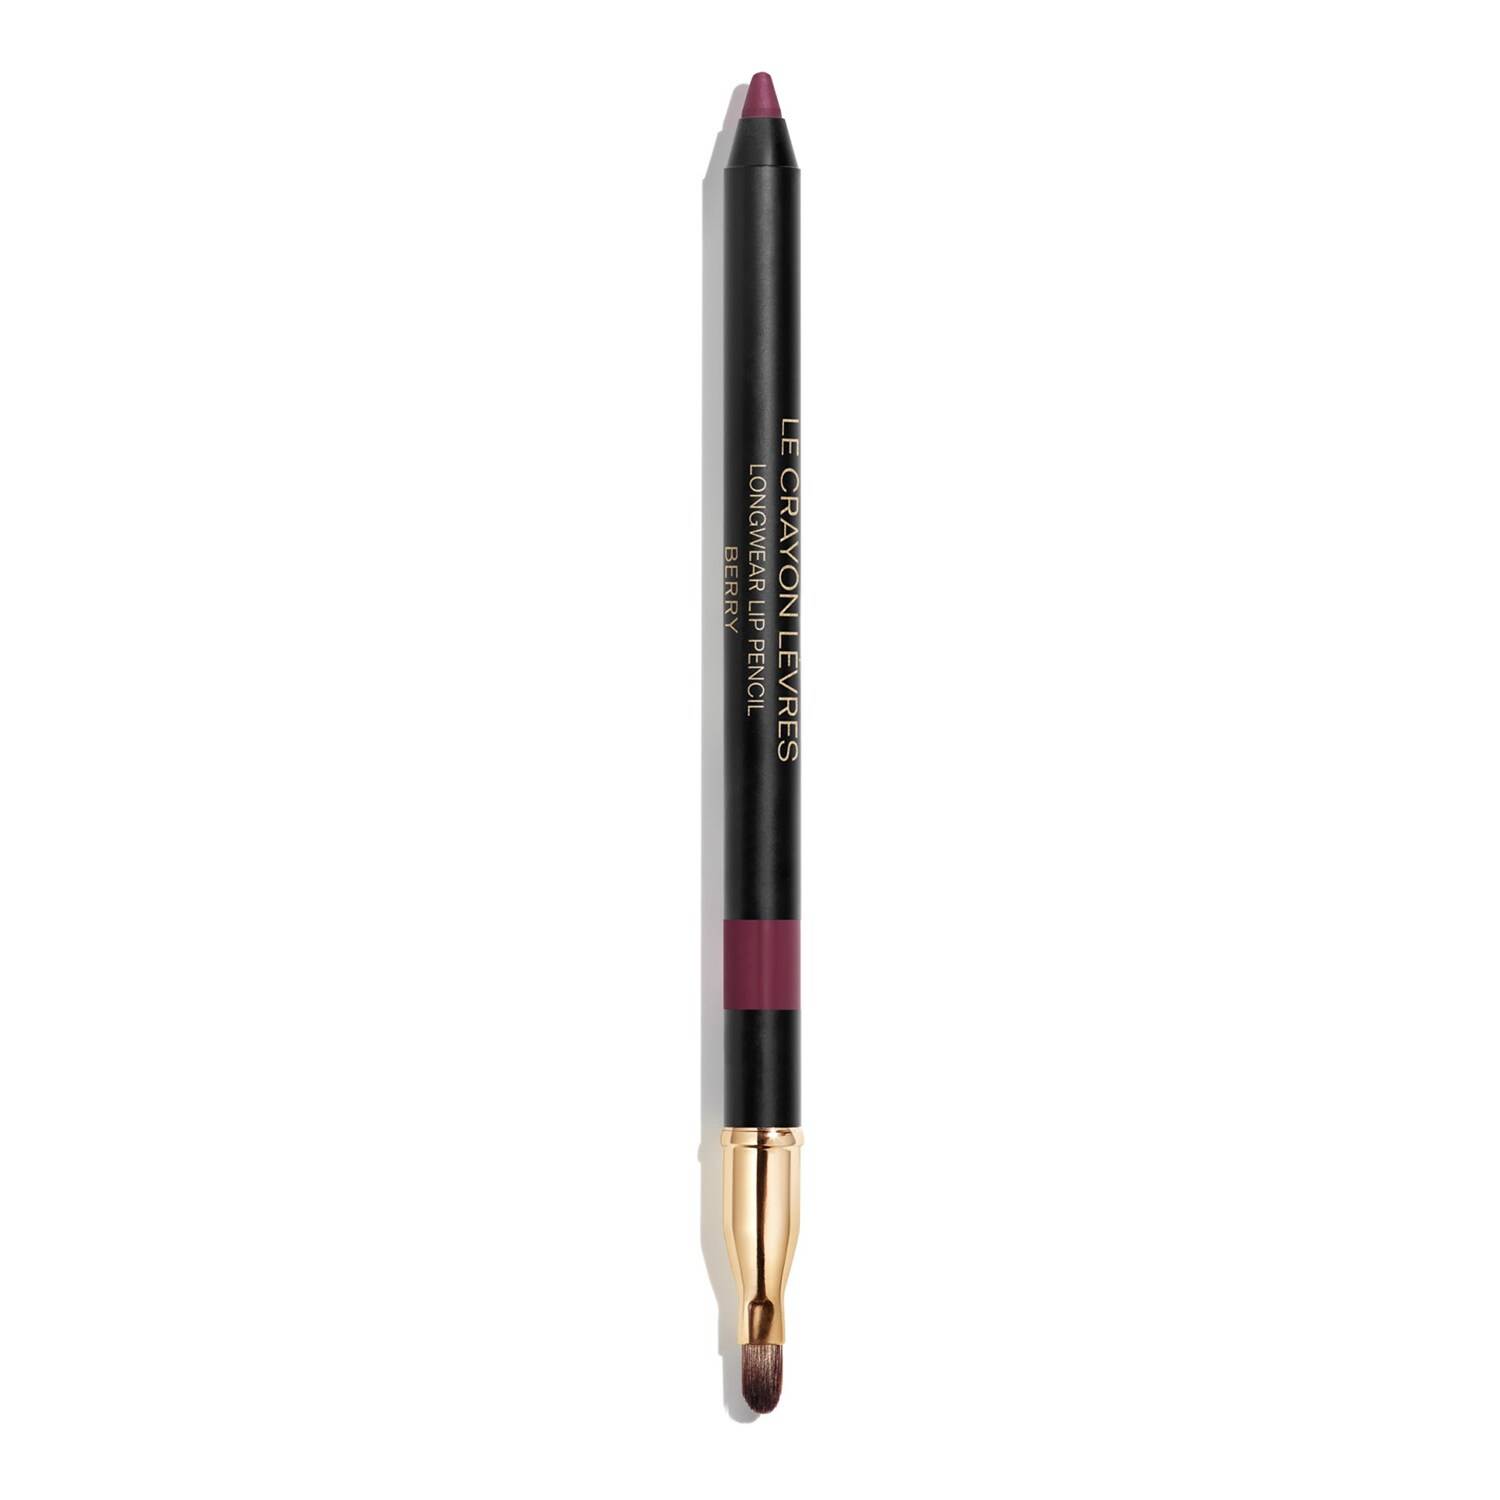 Chanel Le Crayon Levres - Longwear Lip Pencil 186 Berry